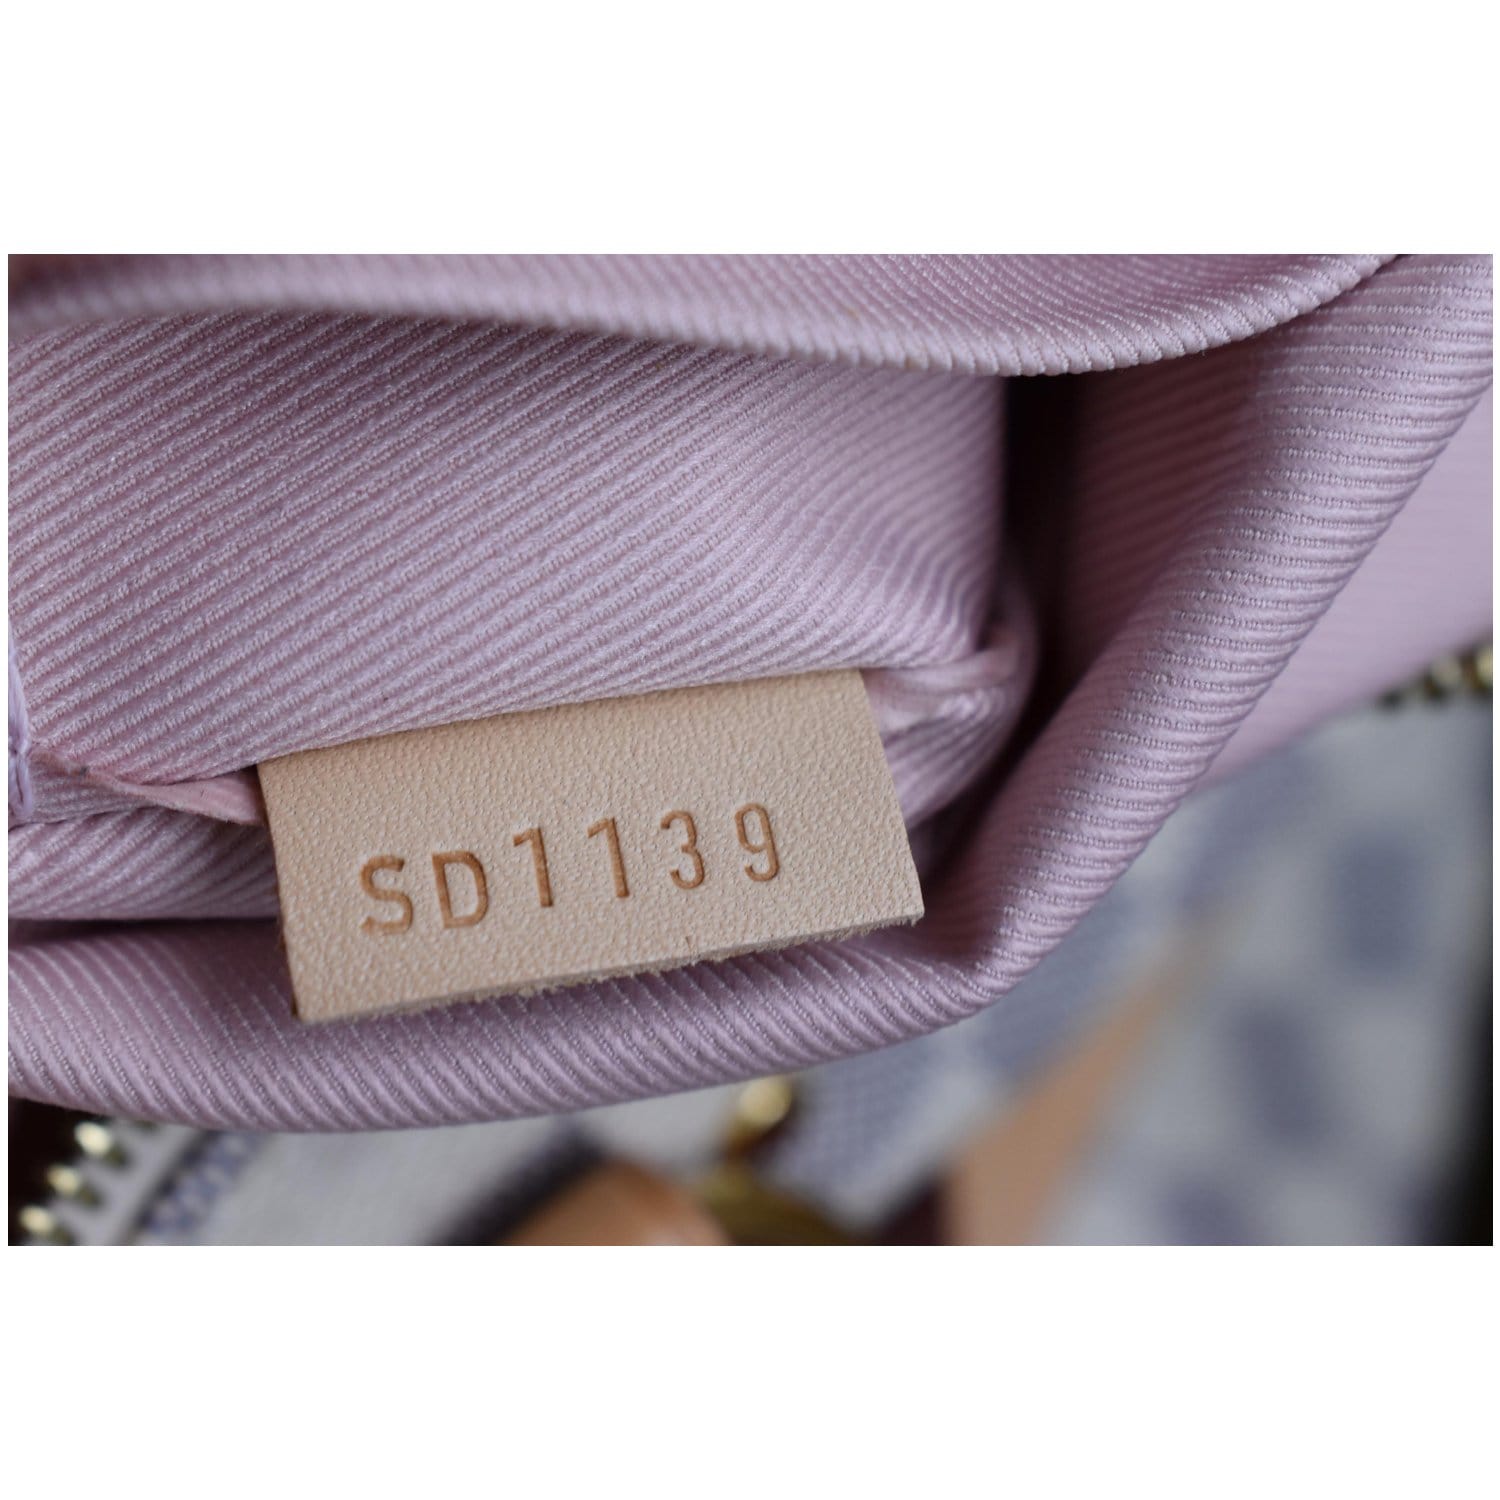 Louis Vuitton Lymington Handbag Damier Brown 22605055